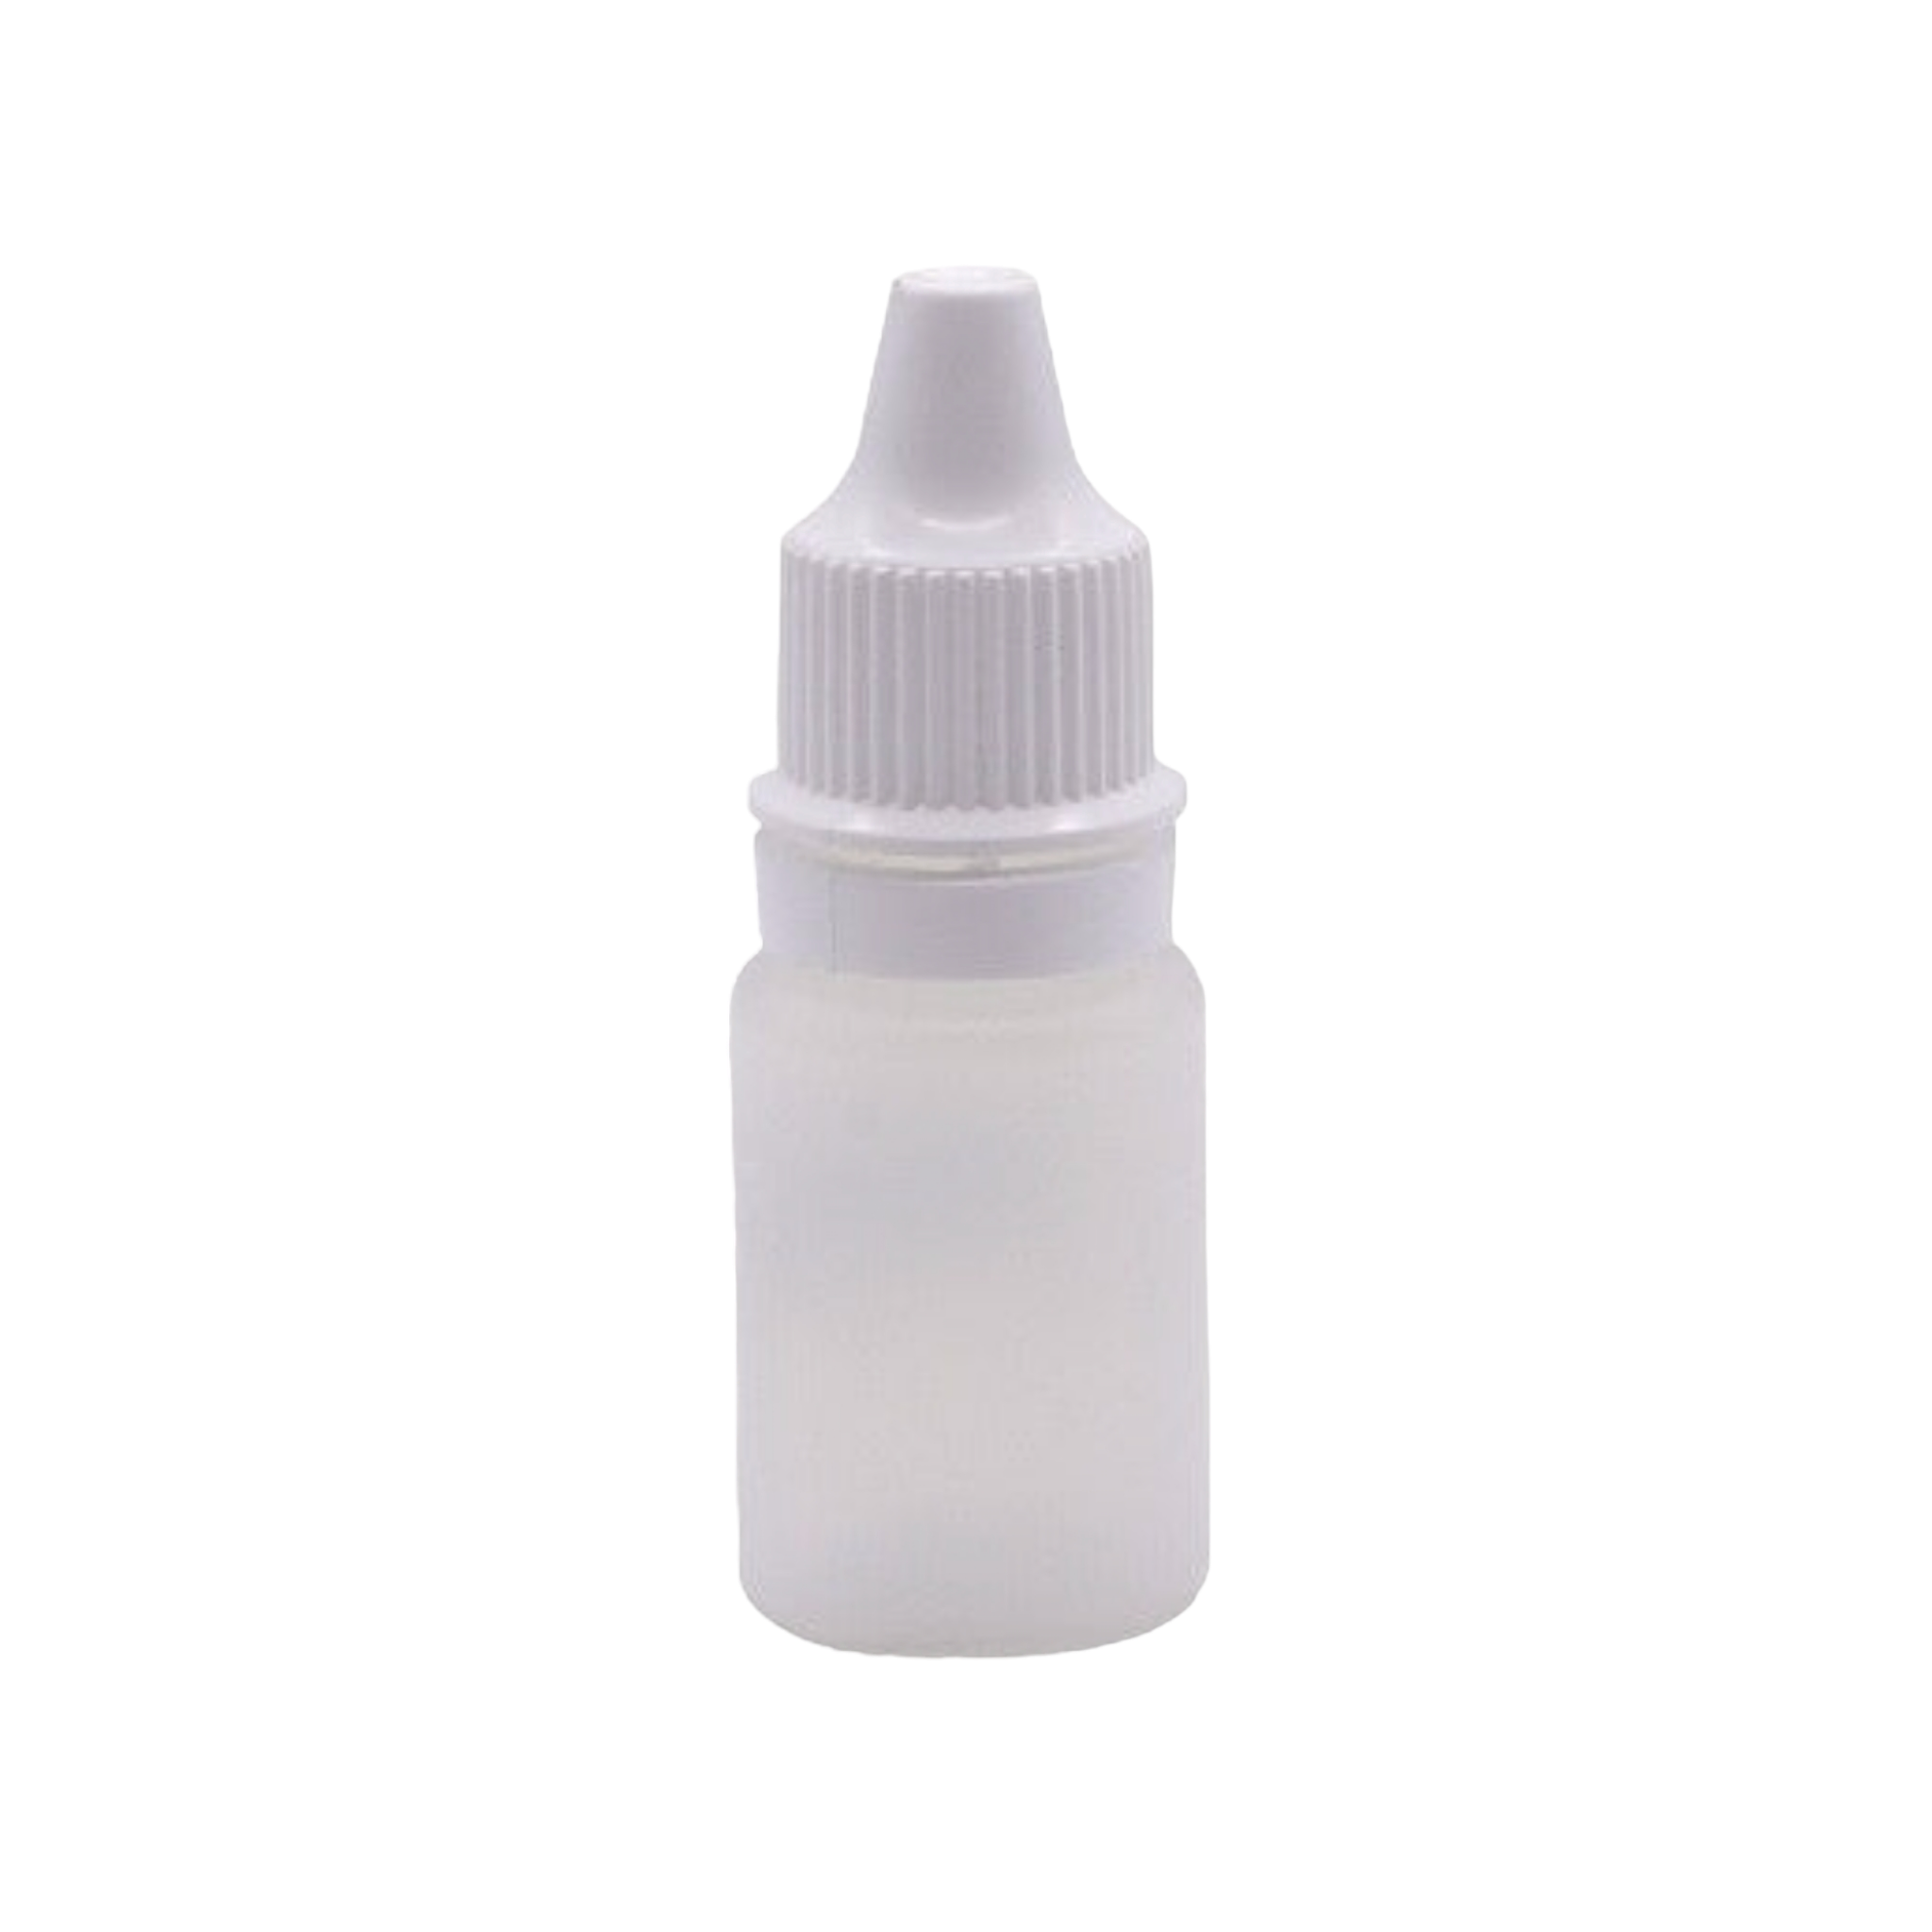 10ml Dropper Bottle Plastic Natural with ratchet